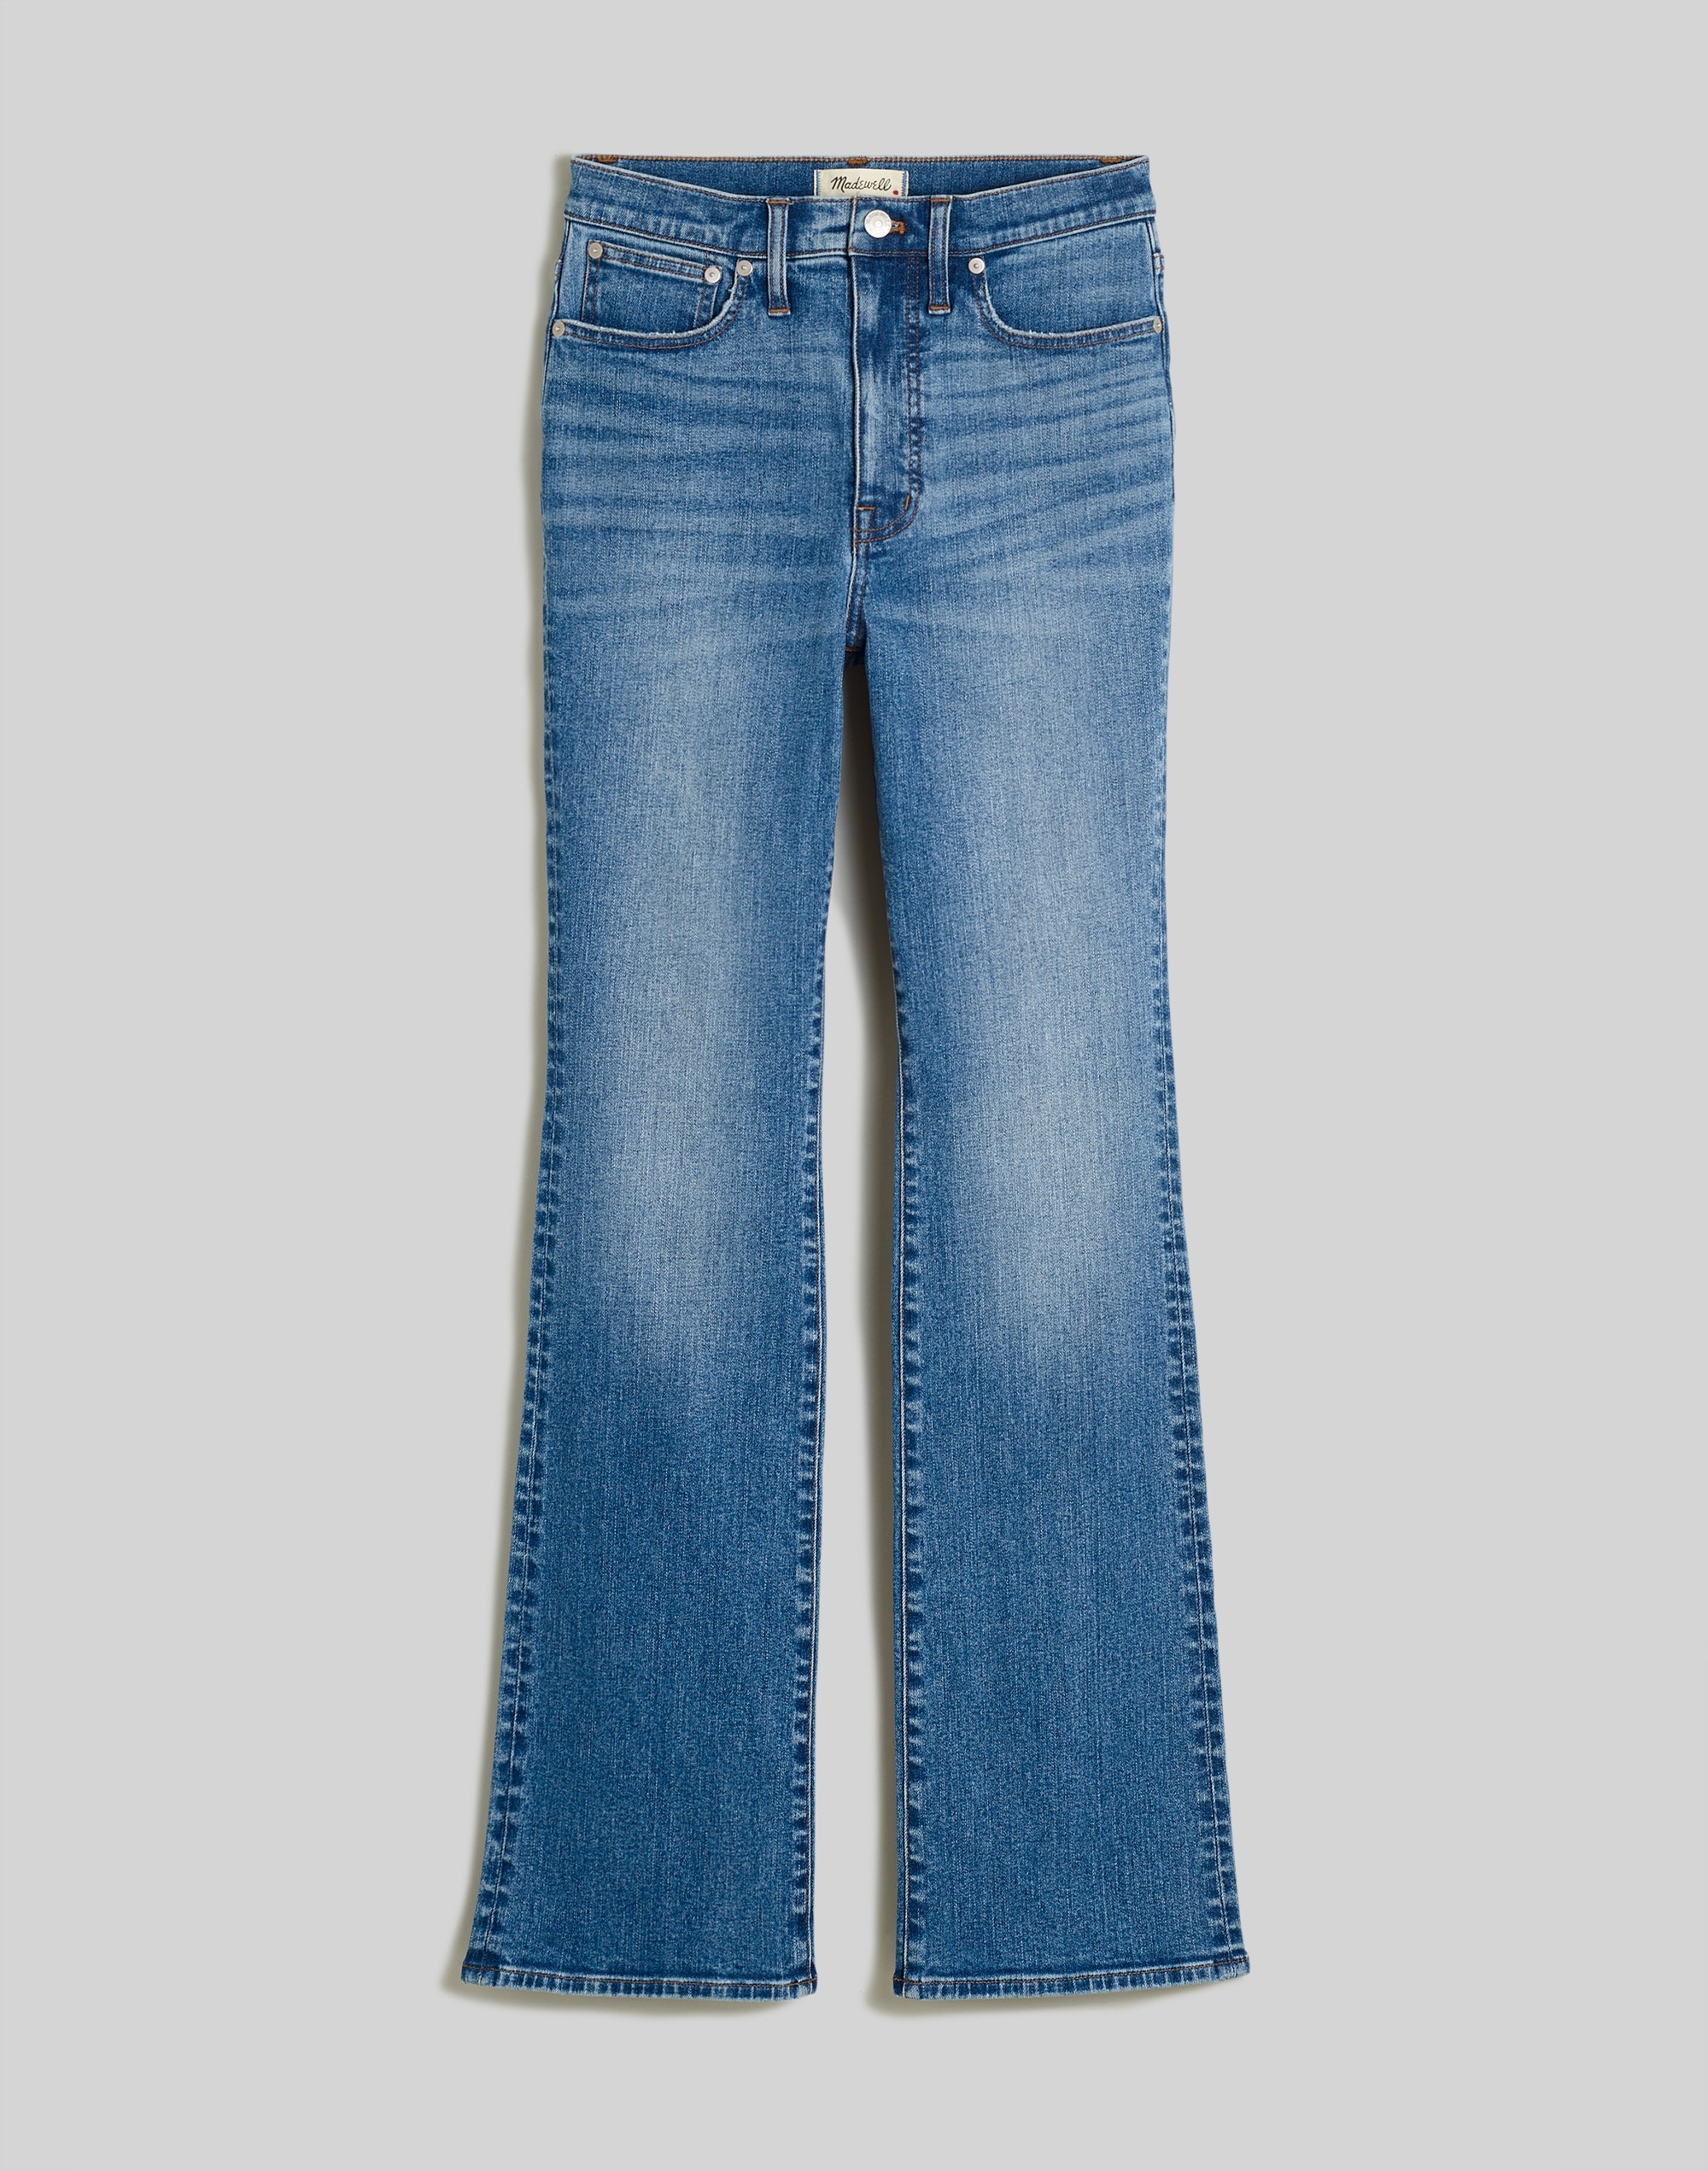 Skinny Flare Jeans in Fairson Wash